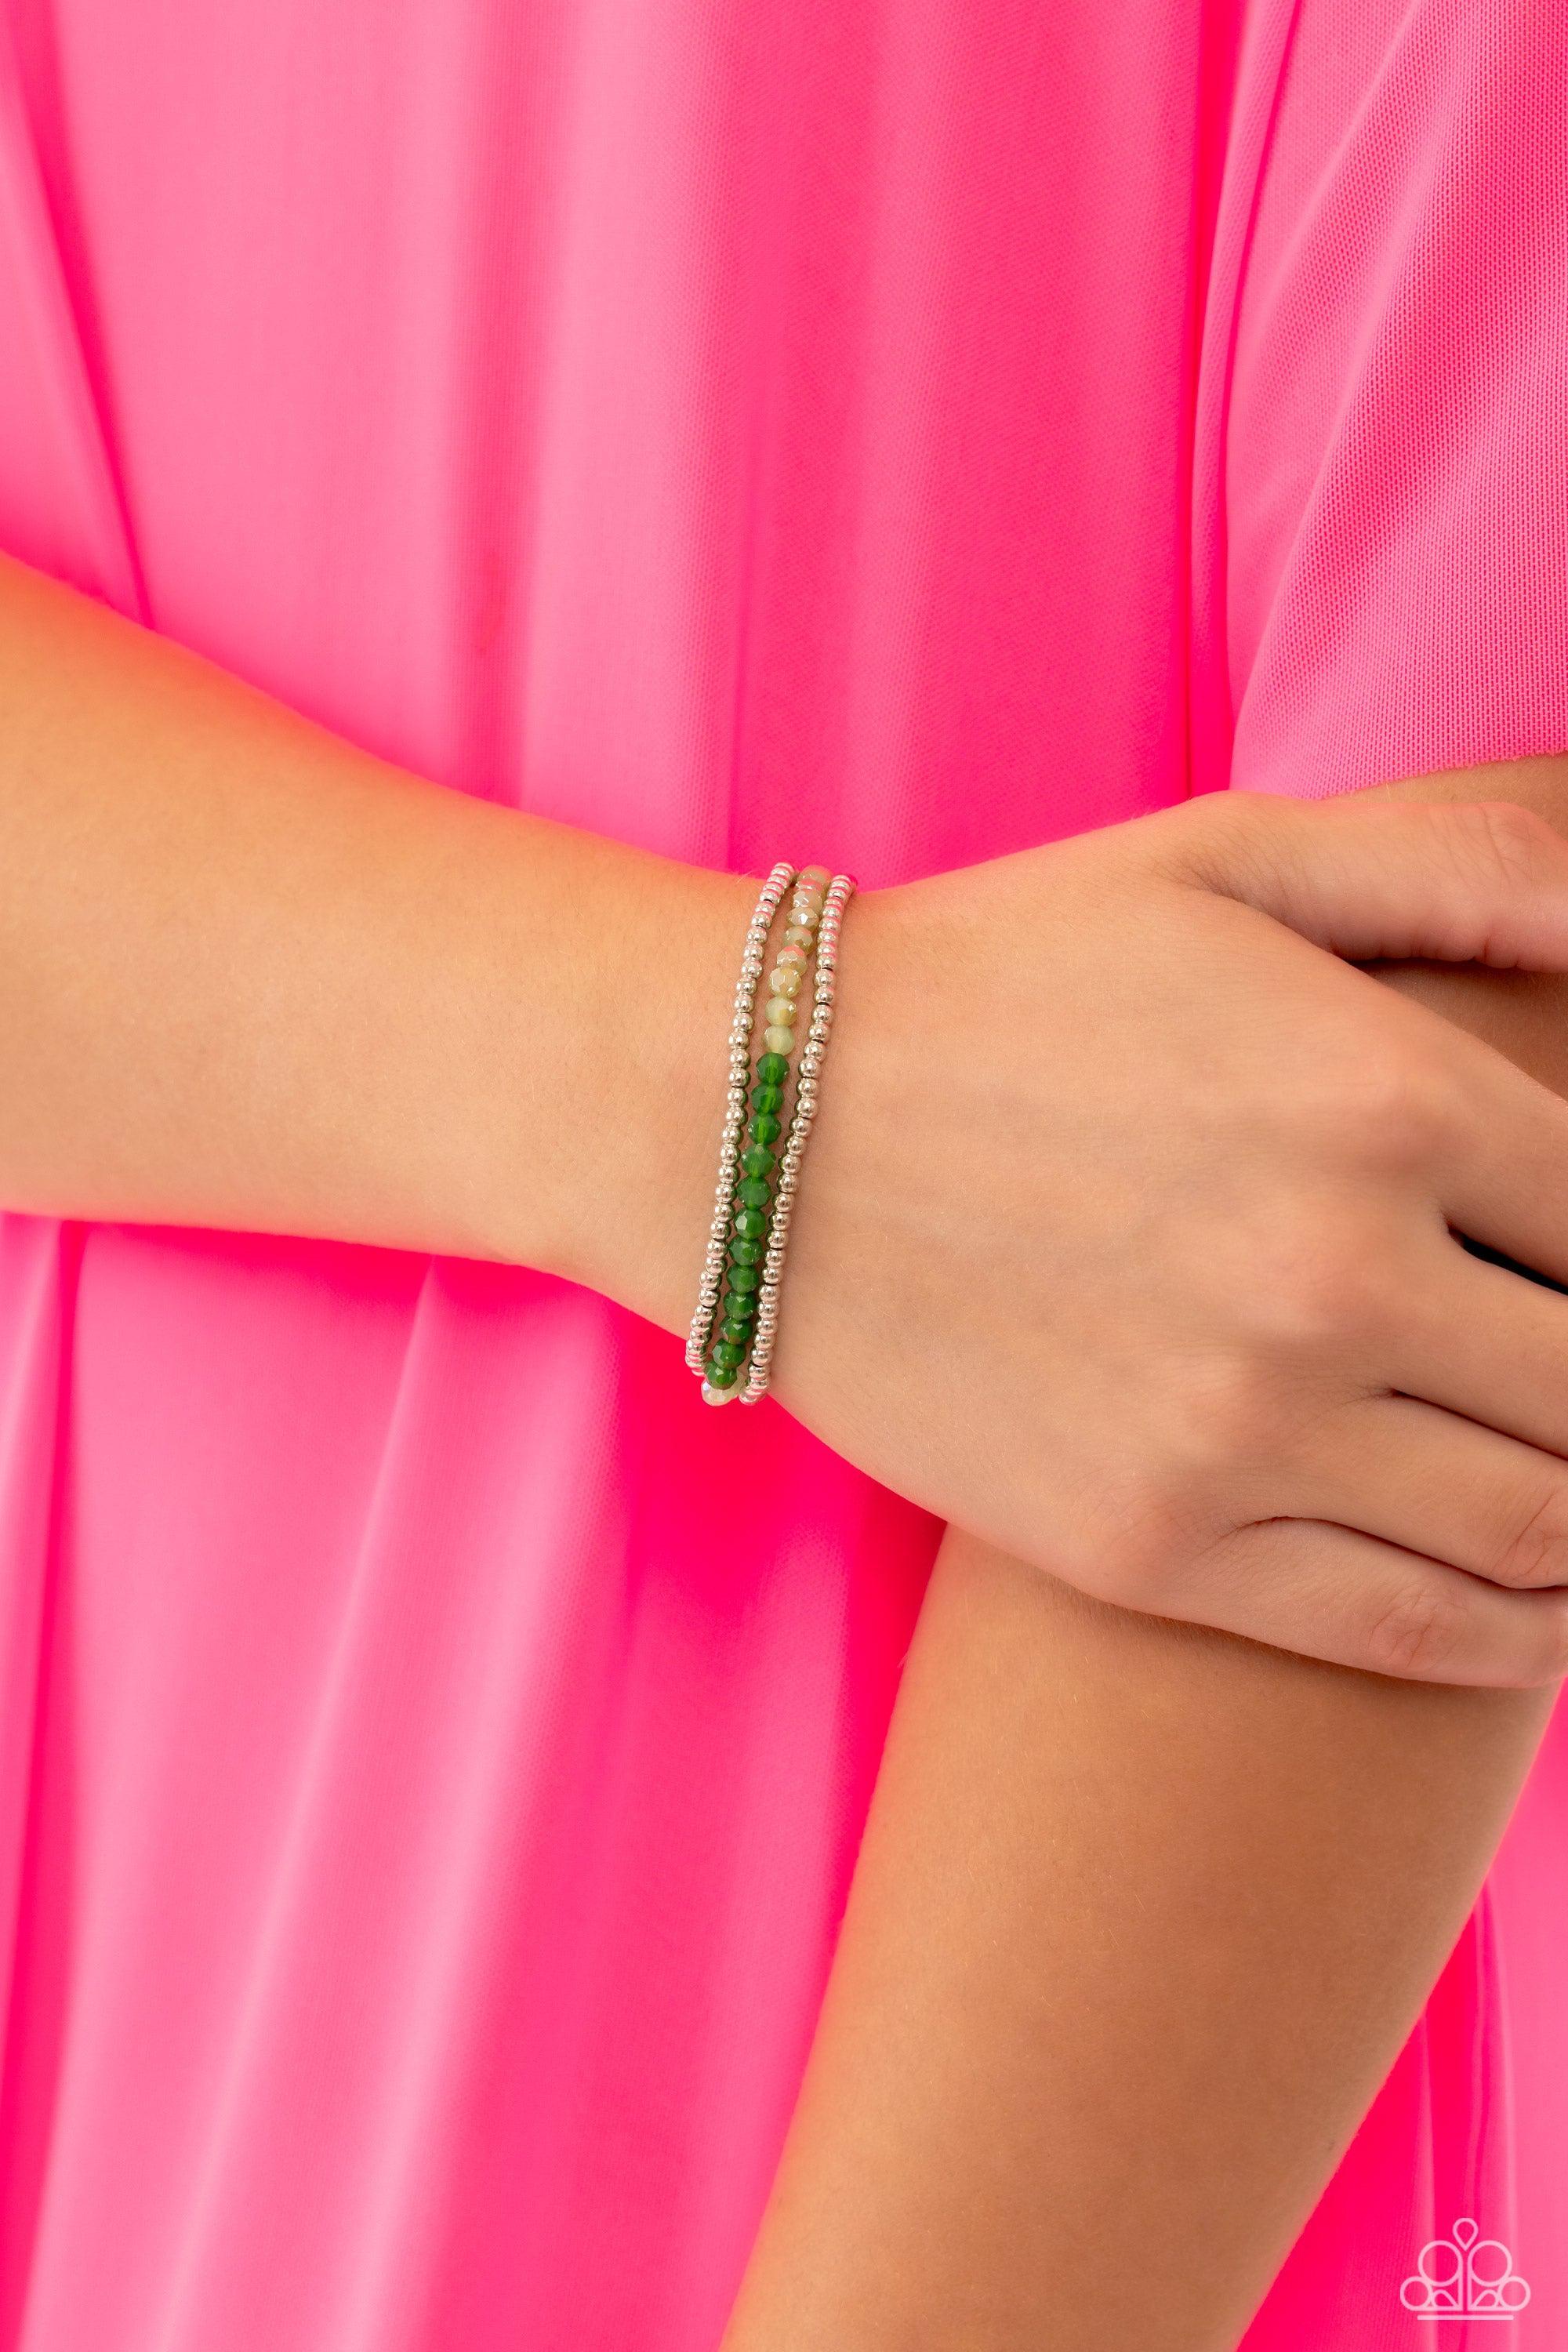 Backstage Beading Green Bracelet - Paparazzi Accessories- lightbox - CarasShop.com - $5 Jewelry by Cara Jewels